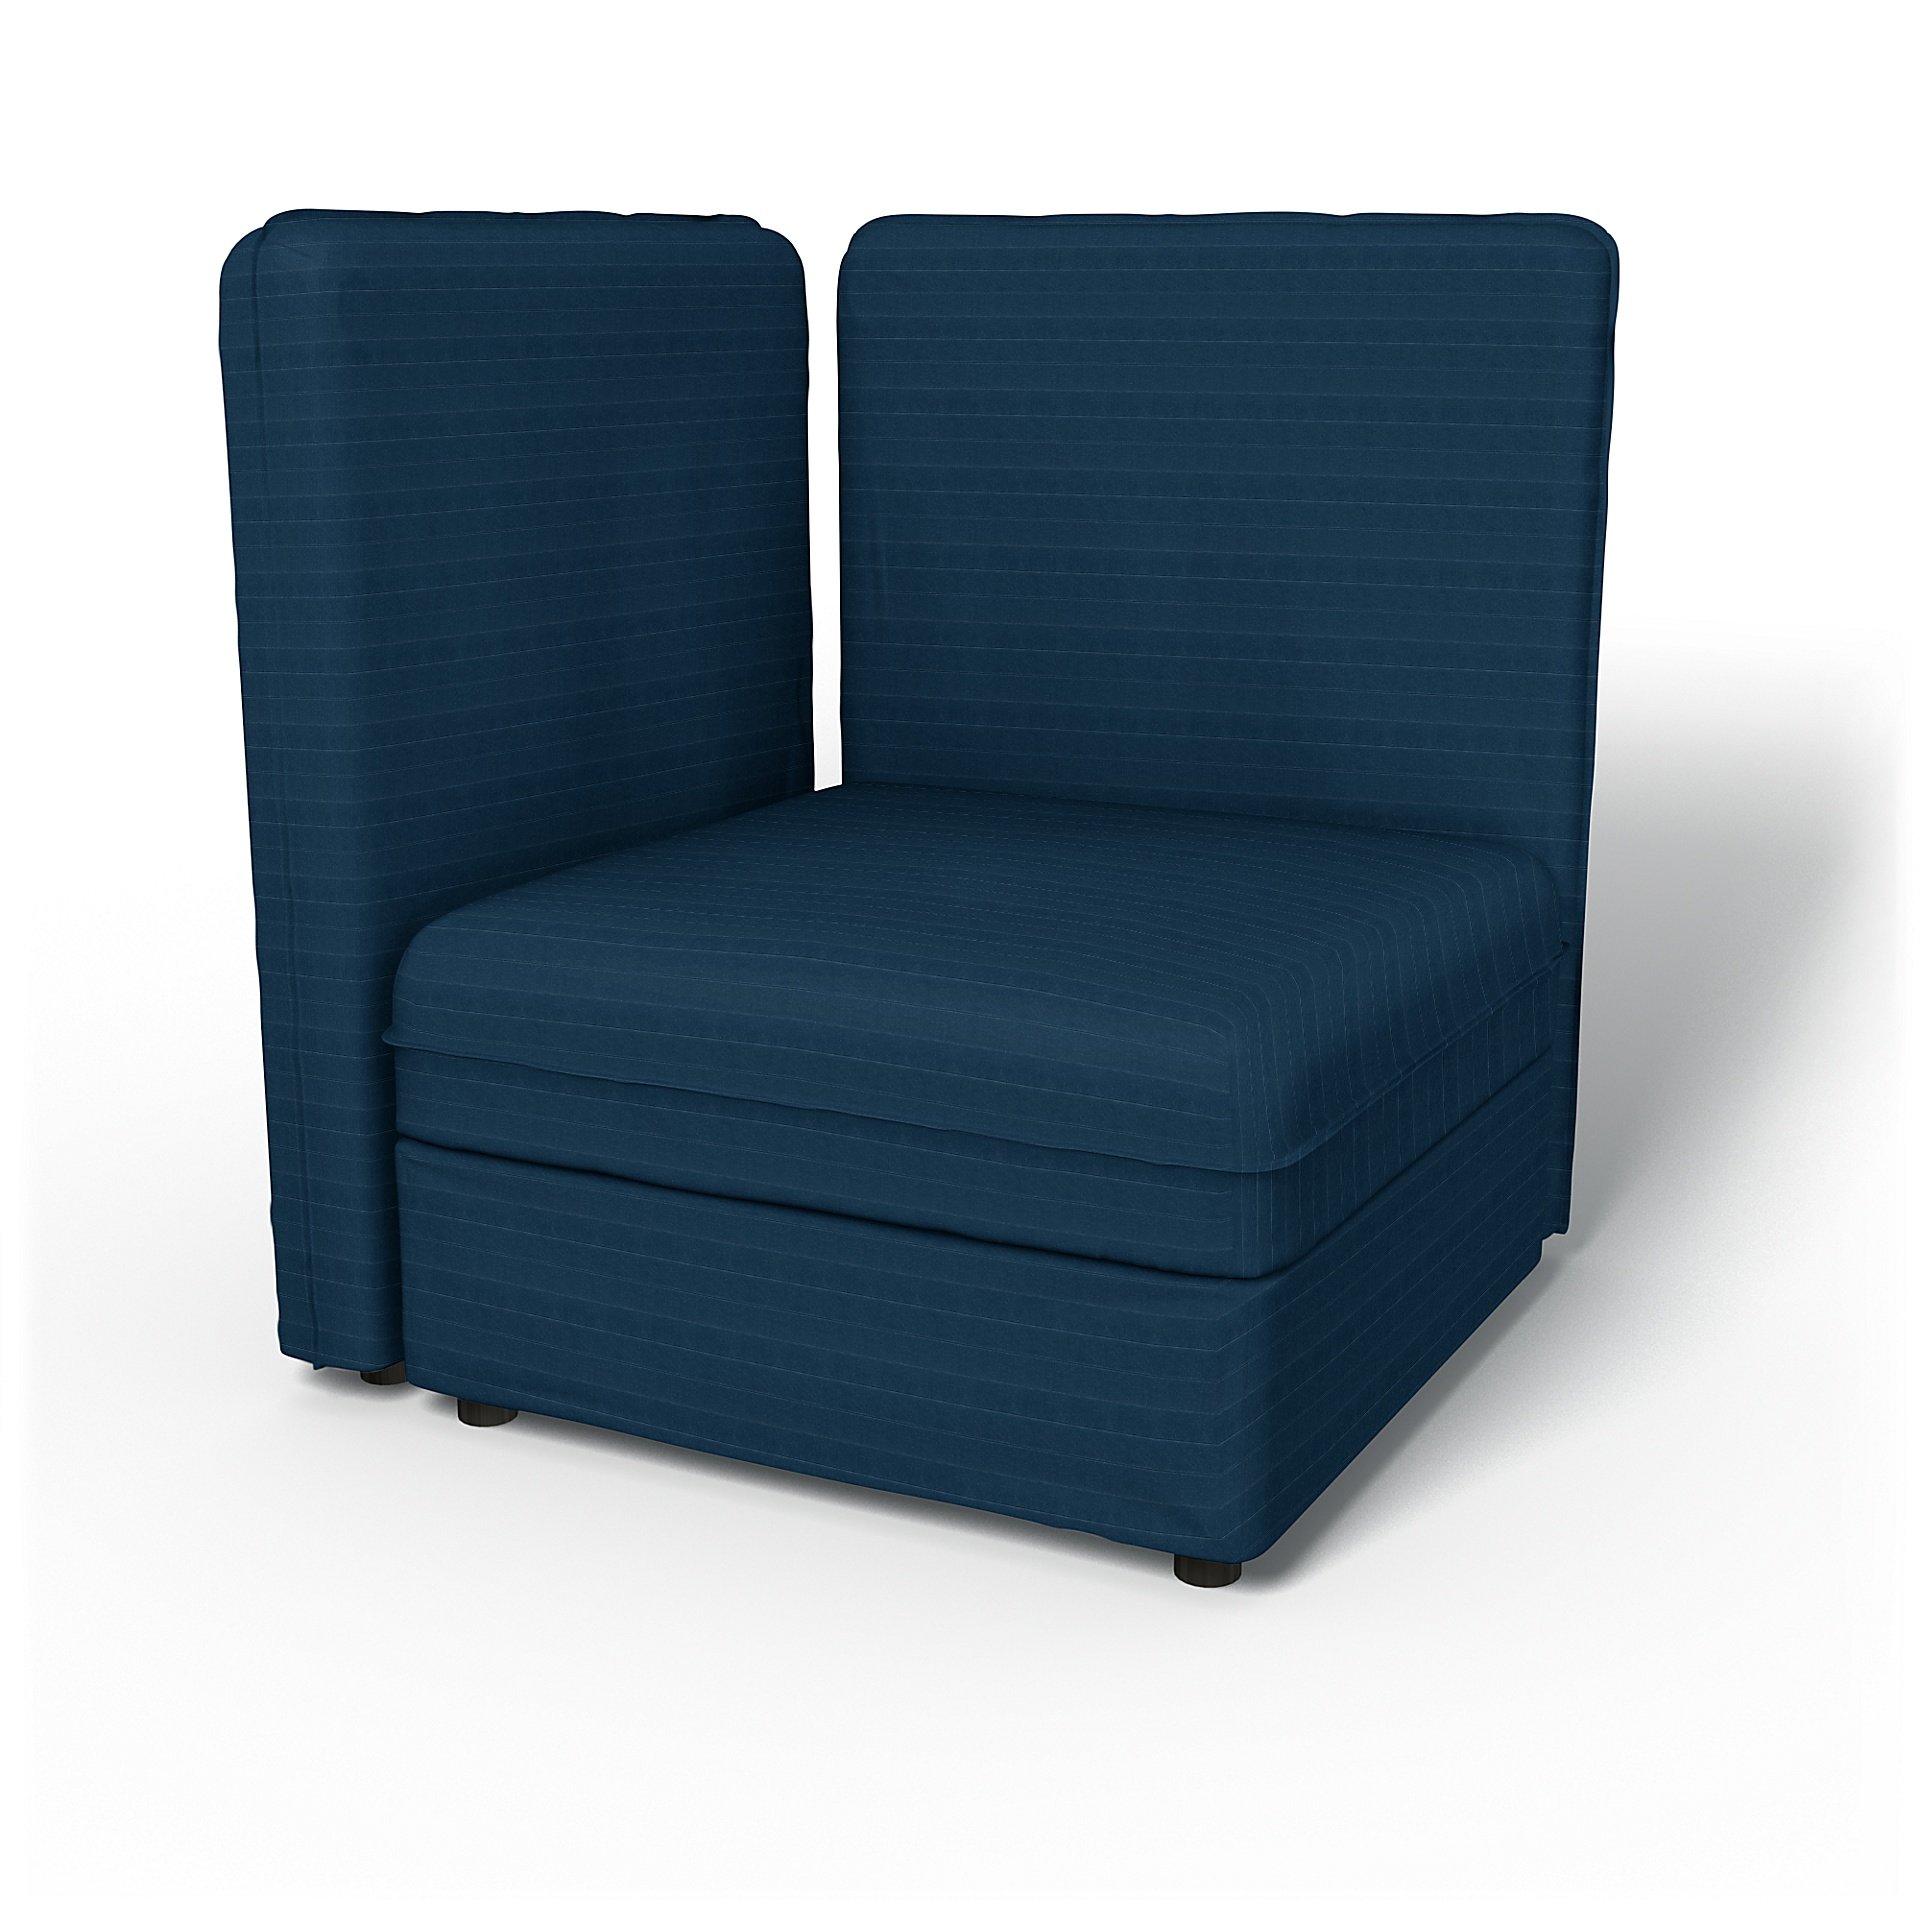 IKEA - Vallentuna Corner Seat Module with High Back and Storage Cover 80x80 32x32in, Denim Blue, Vel